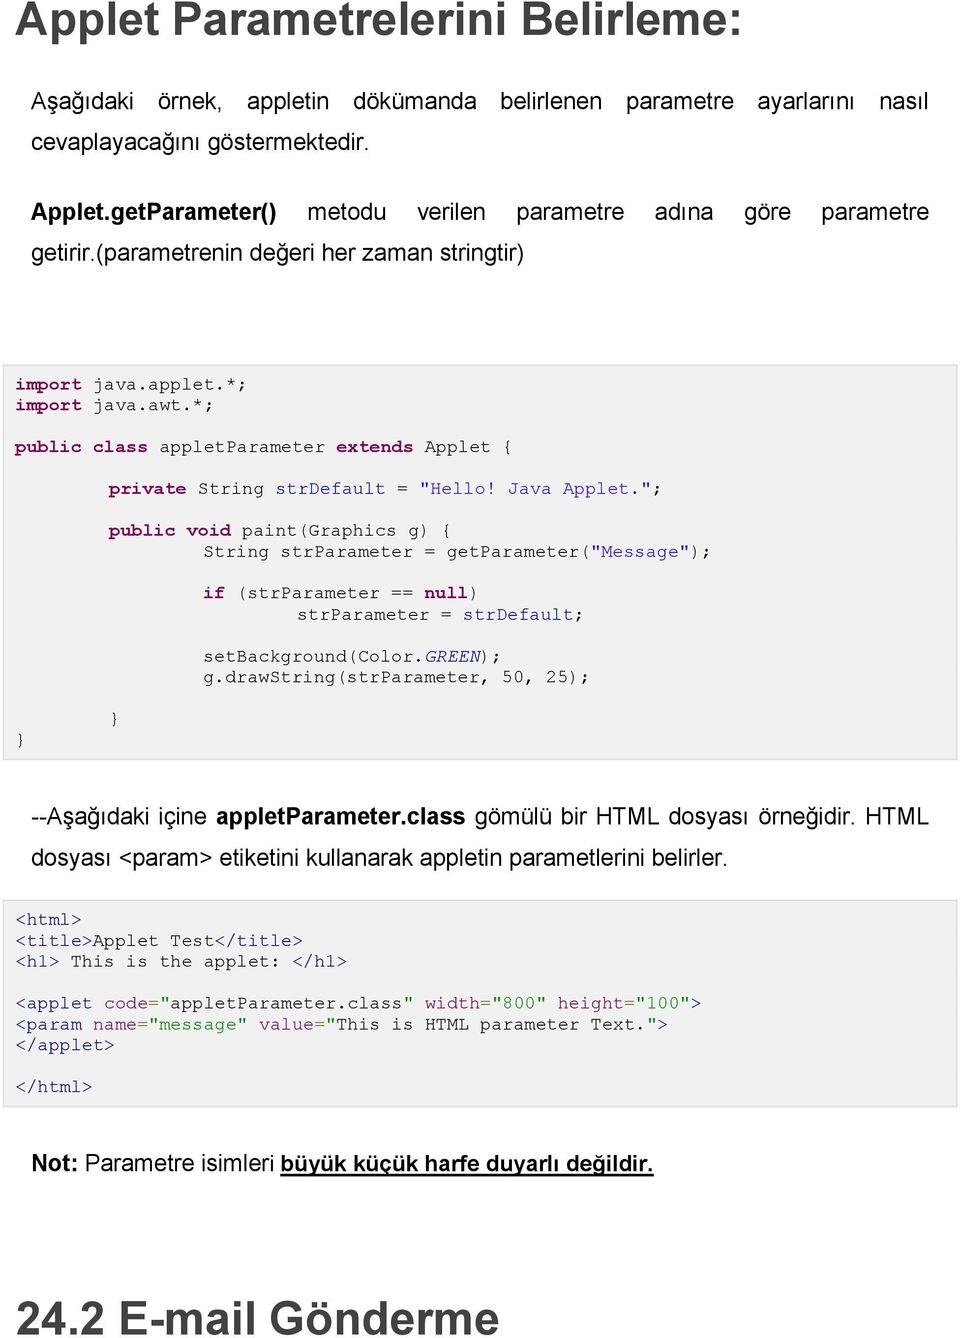 *; public class appletparameter extends Applet { private String strdefault = "Hello! Java Applet.